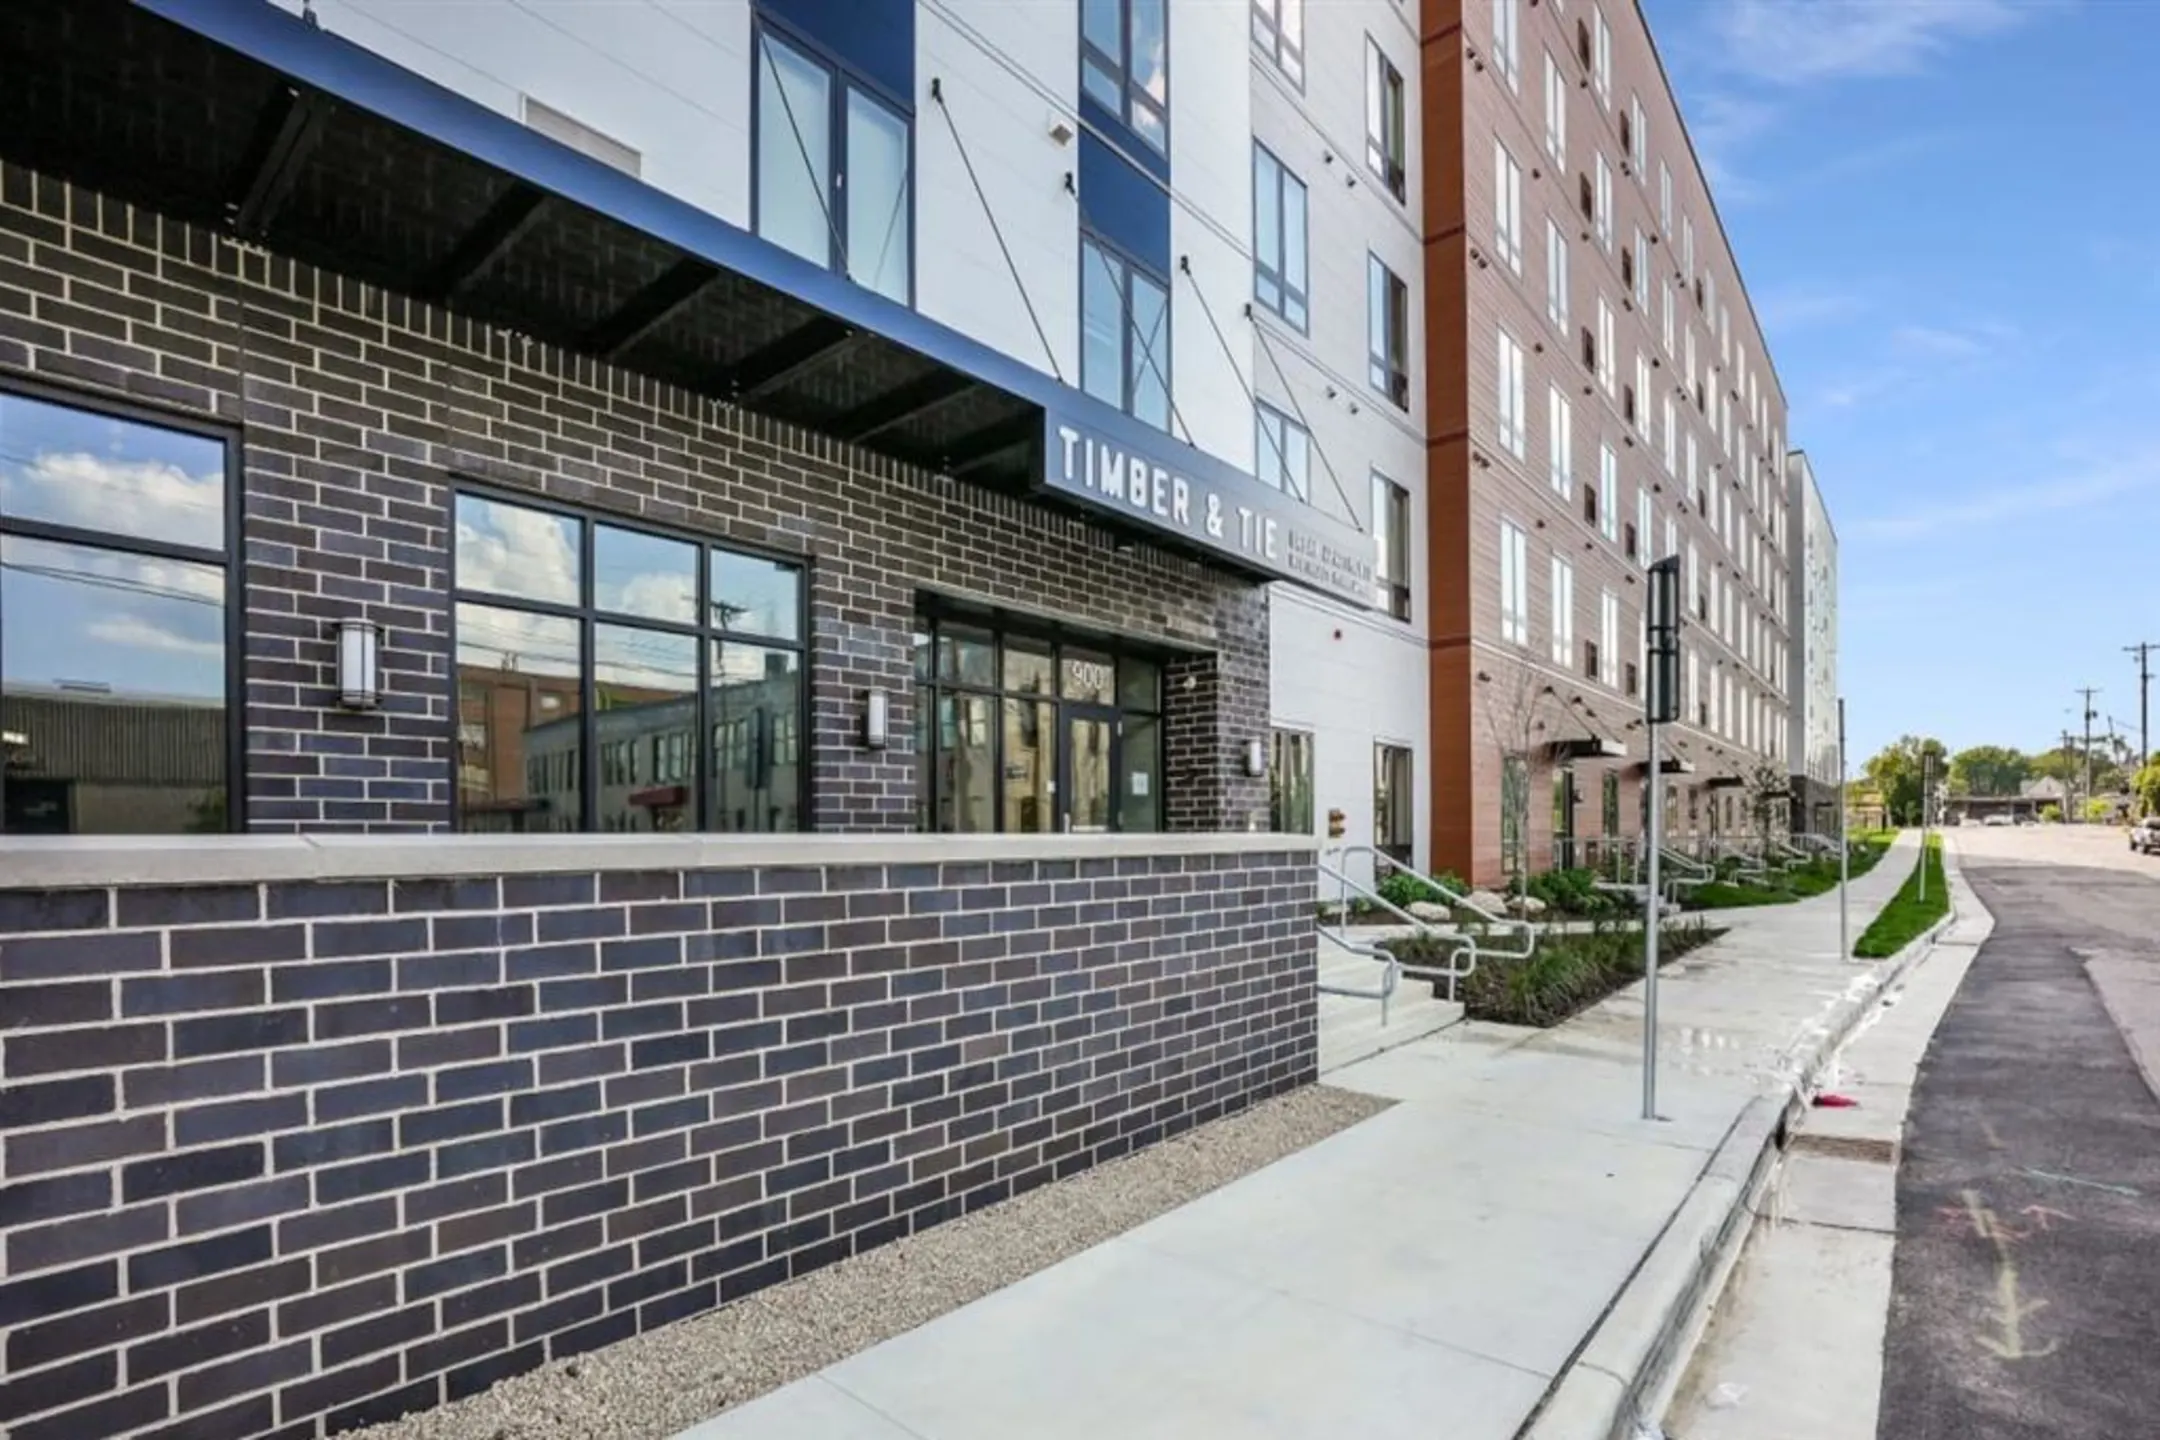 Building - Timber & Tie Apartments - Minneapolis, MN